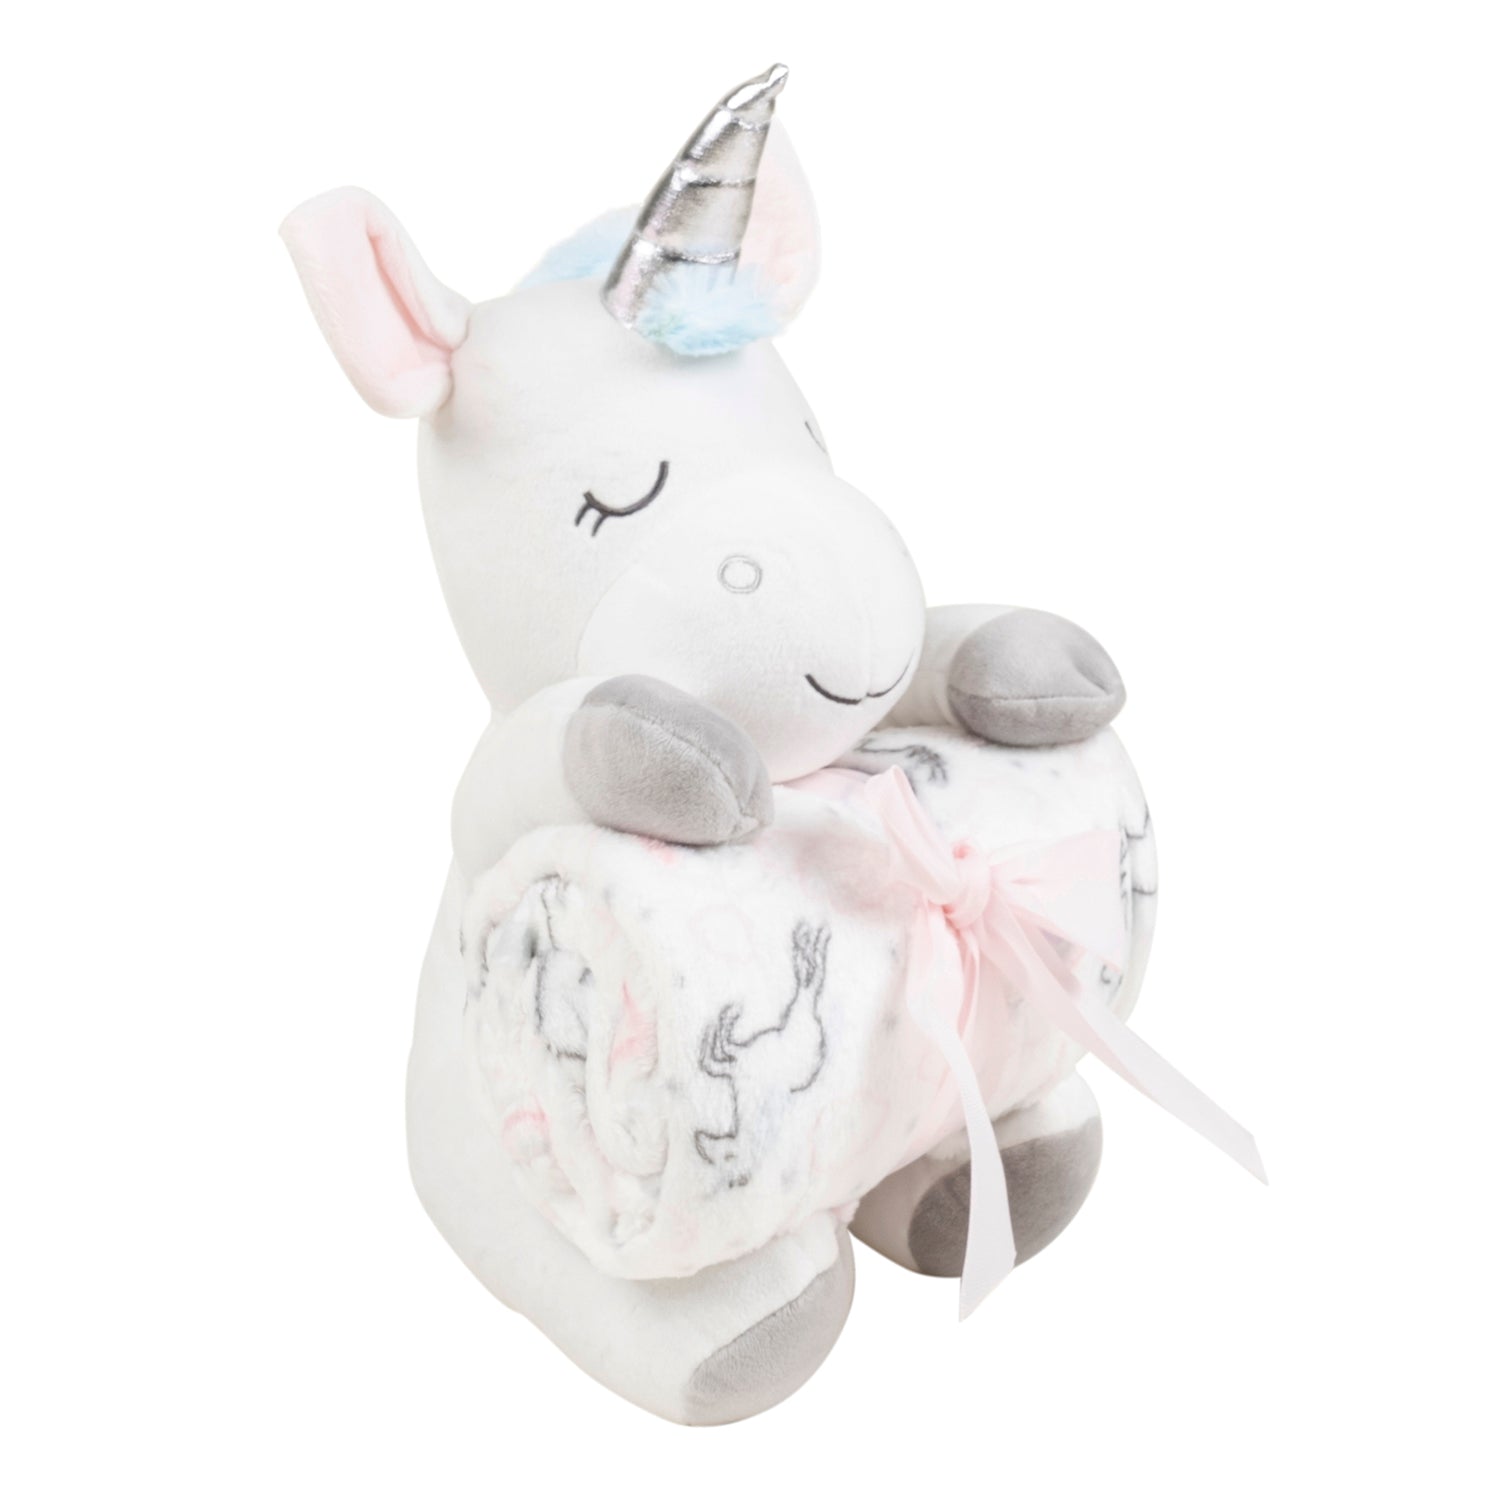 Baby Moo Unicorn Snuggle Buddy Soft Rattle and Plush Blanket Gift Toy Blanket - Pink